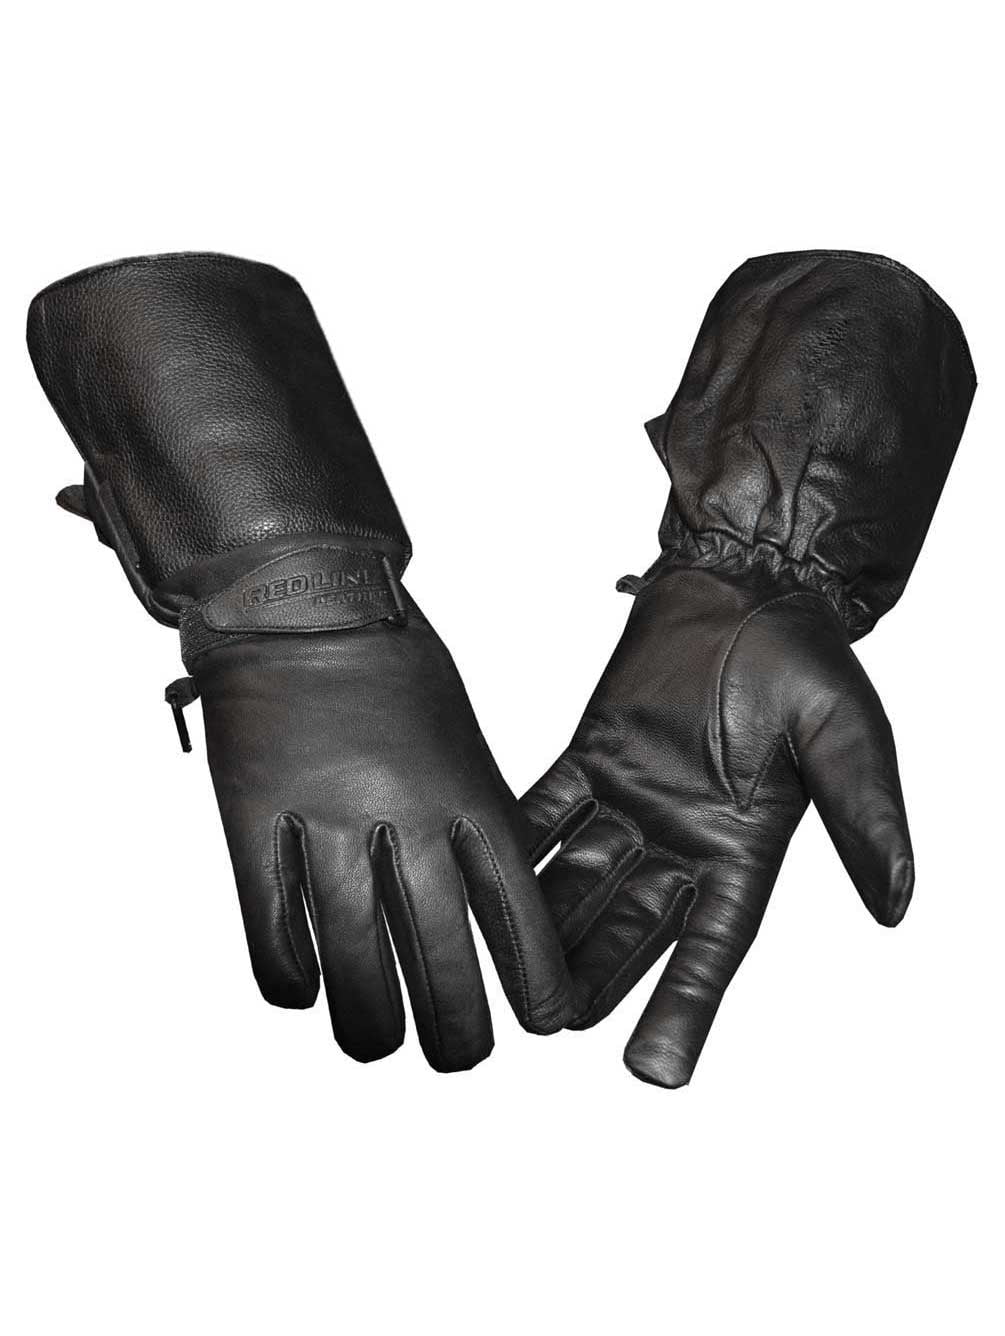 Redline Women S Full Finger Gauntlet Leather Motorcycle Gloves Black Gl 53 Xl Walmart Com